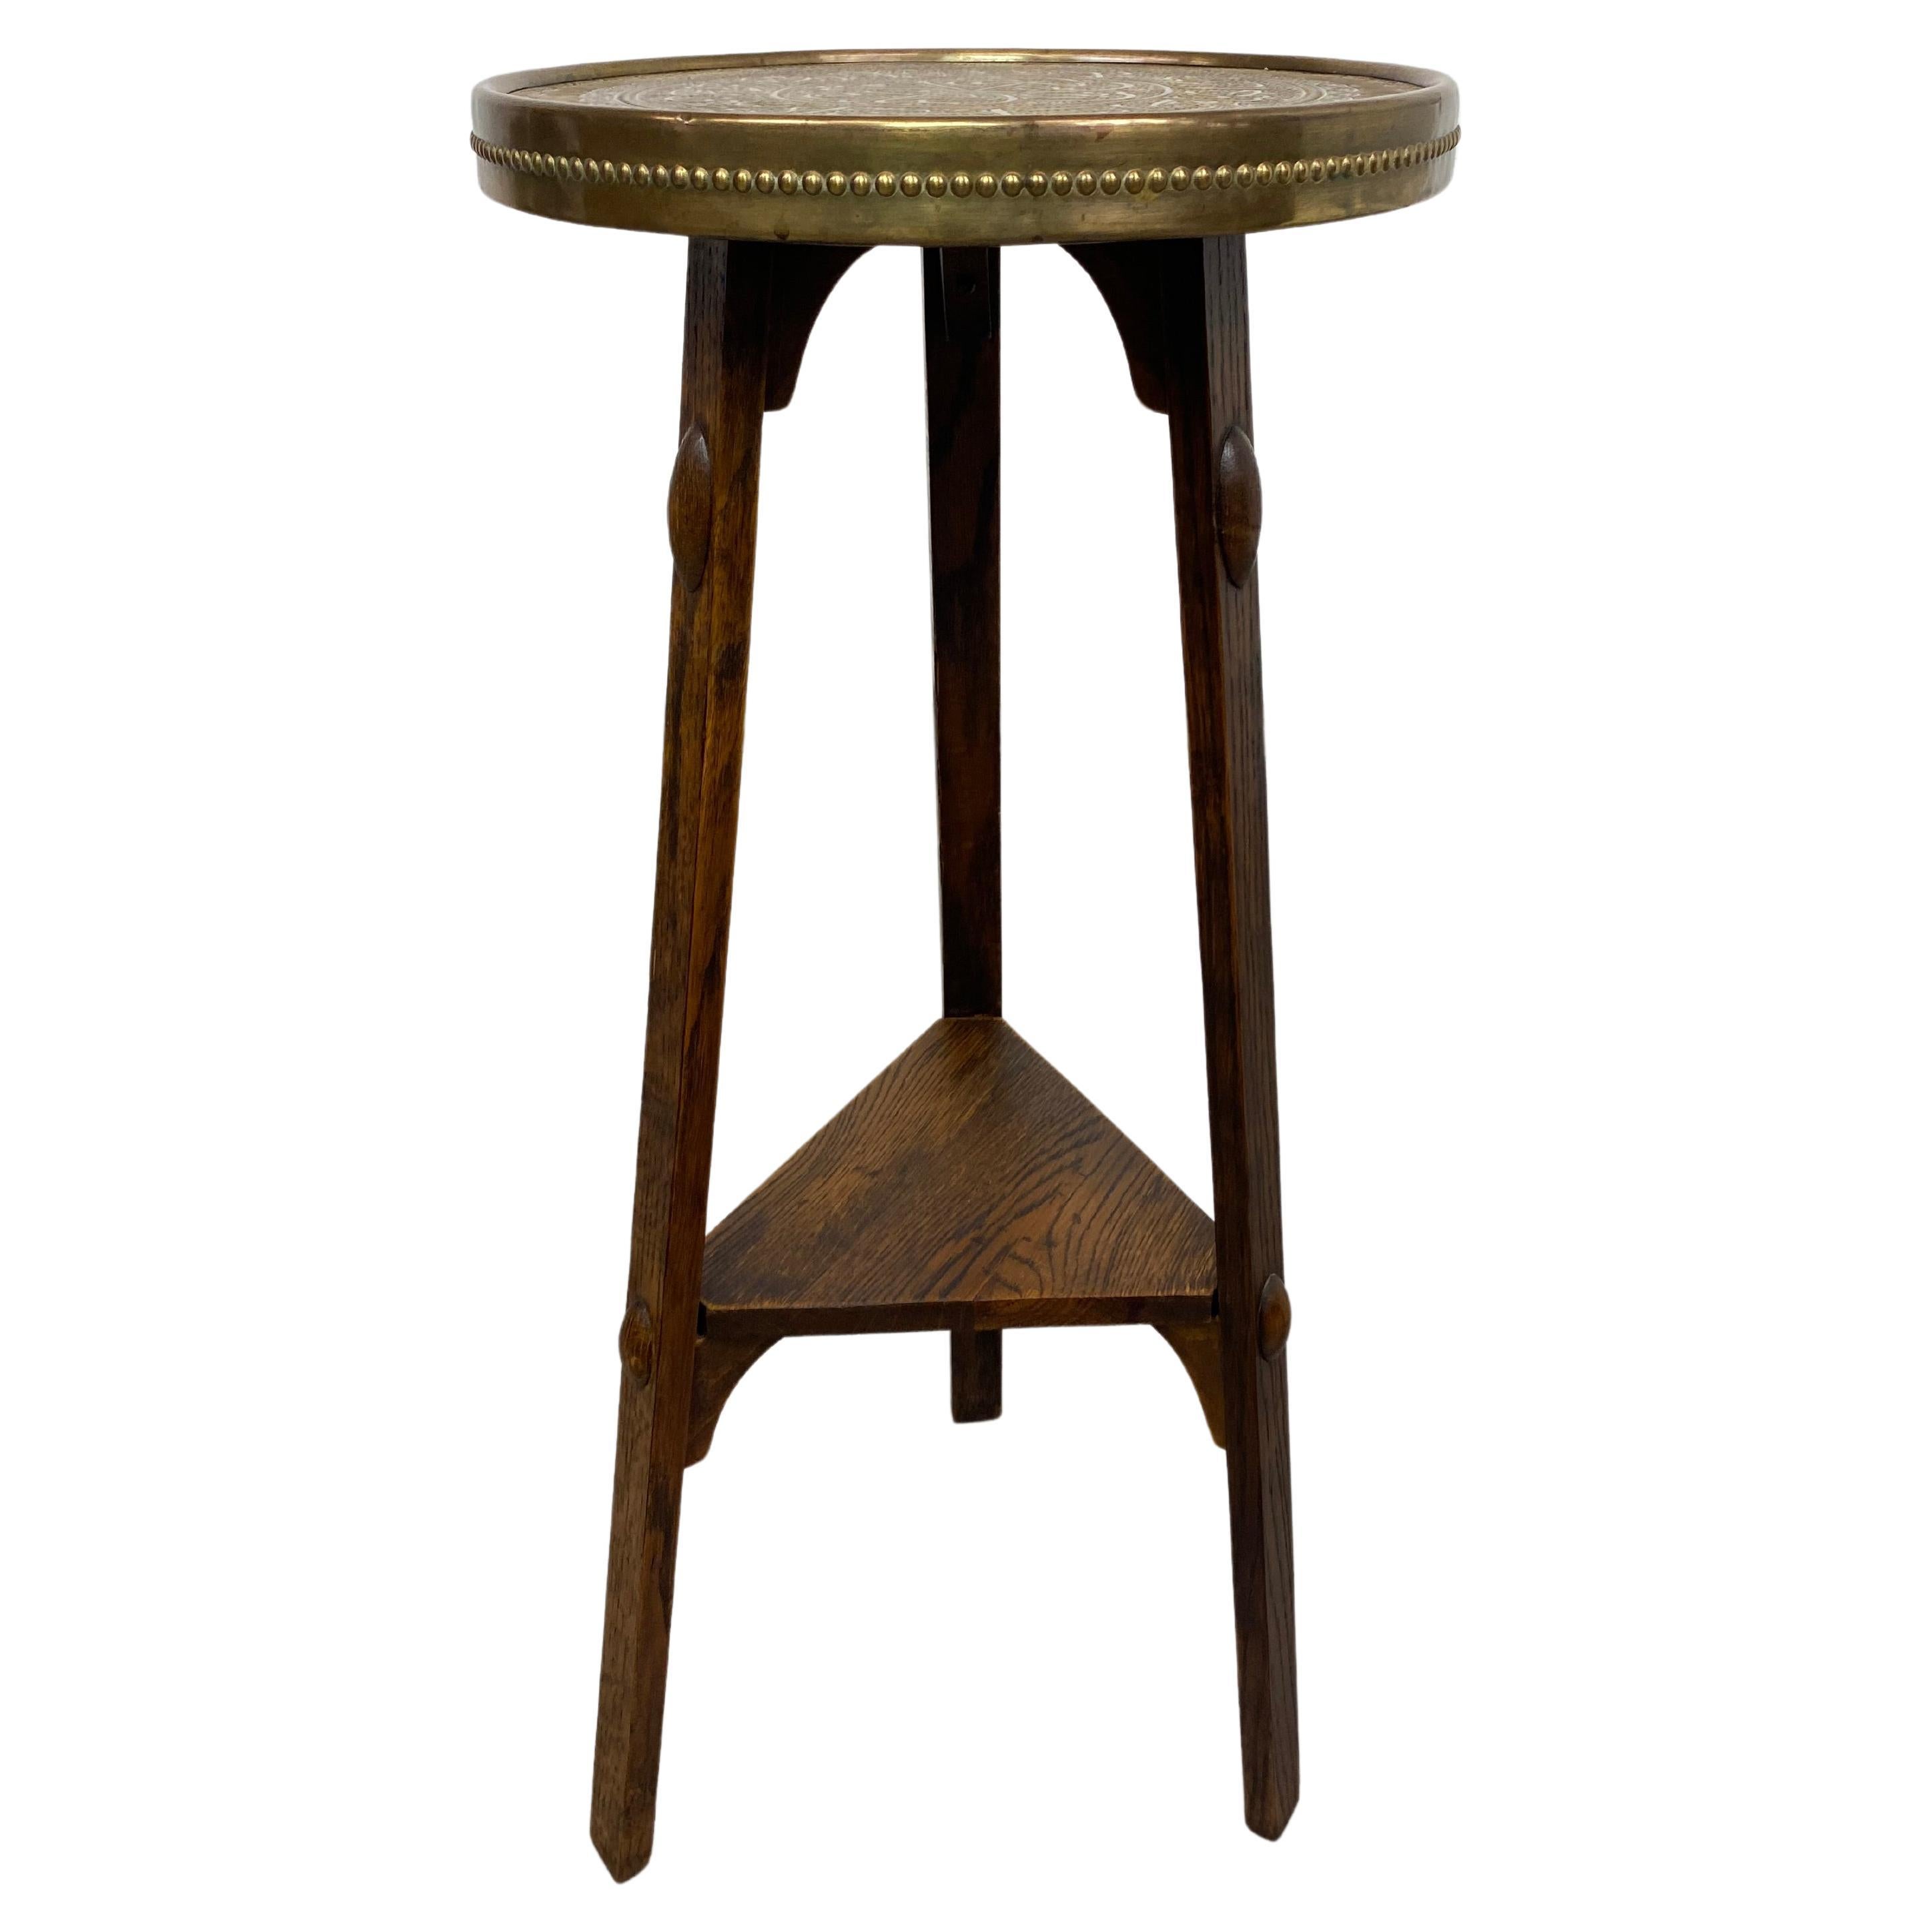 Jugendstil side table with brass top by Joseph Maria Olbrich